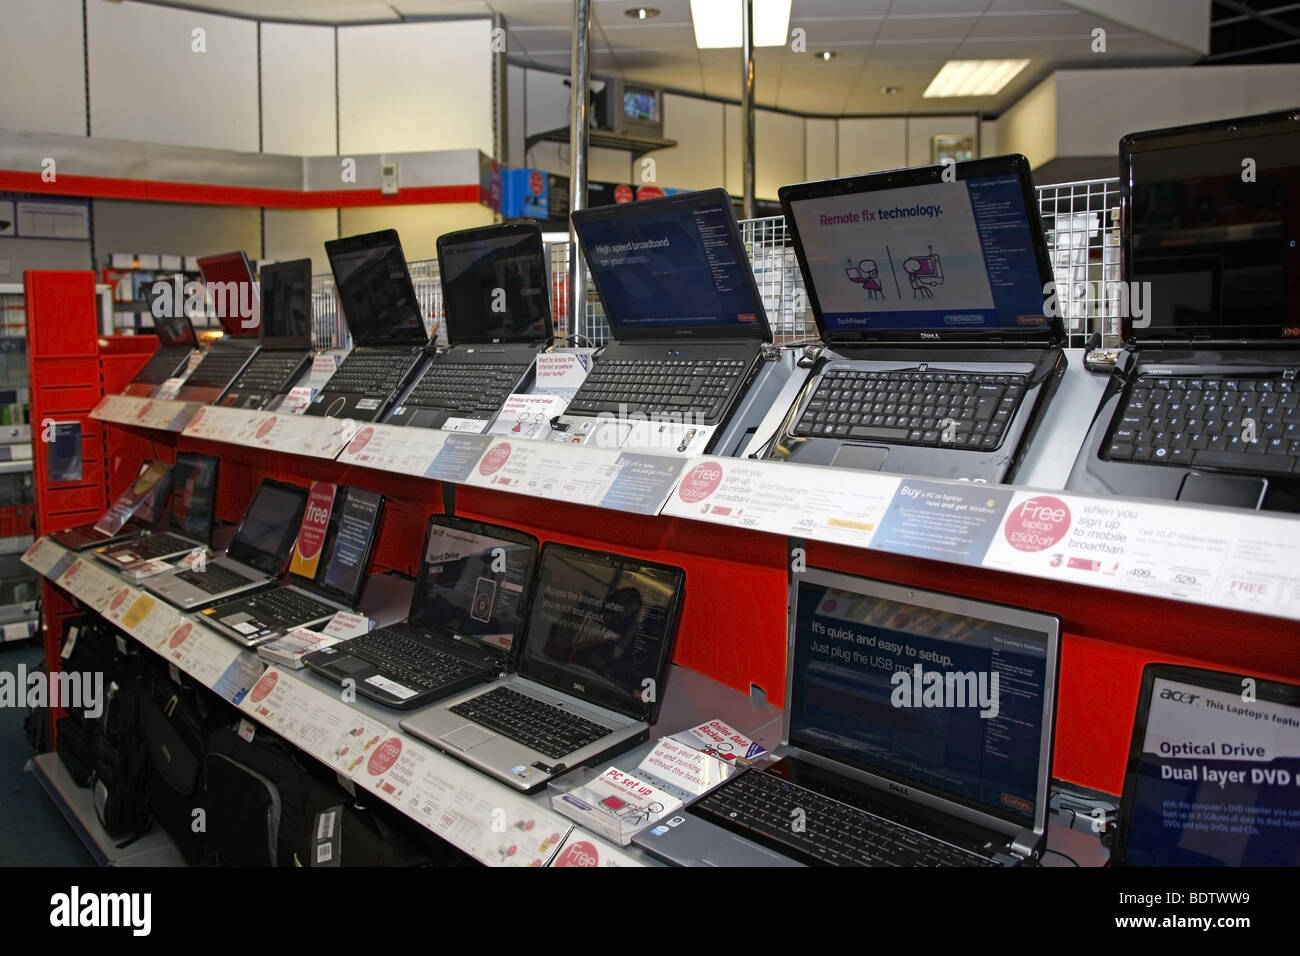 Sales laptop computers samsung hmx h100p